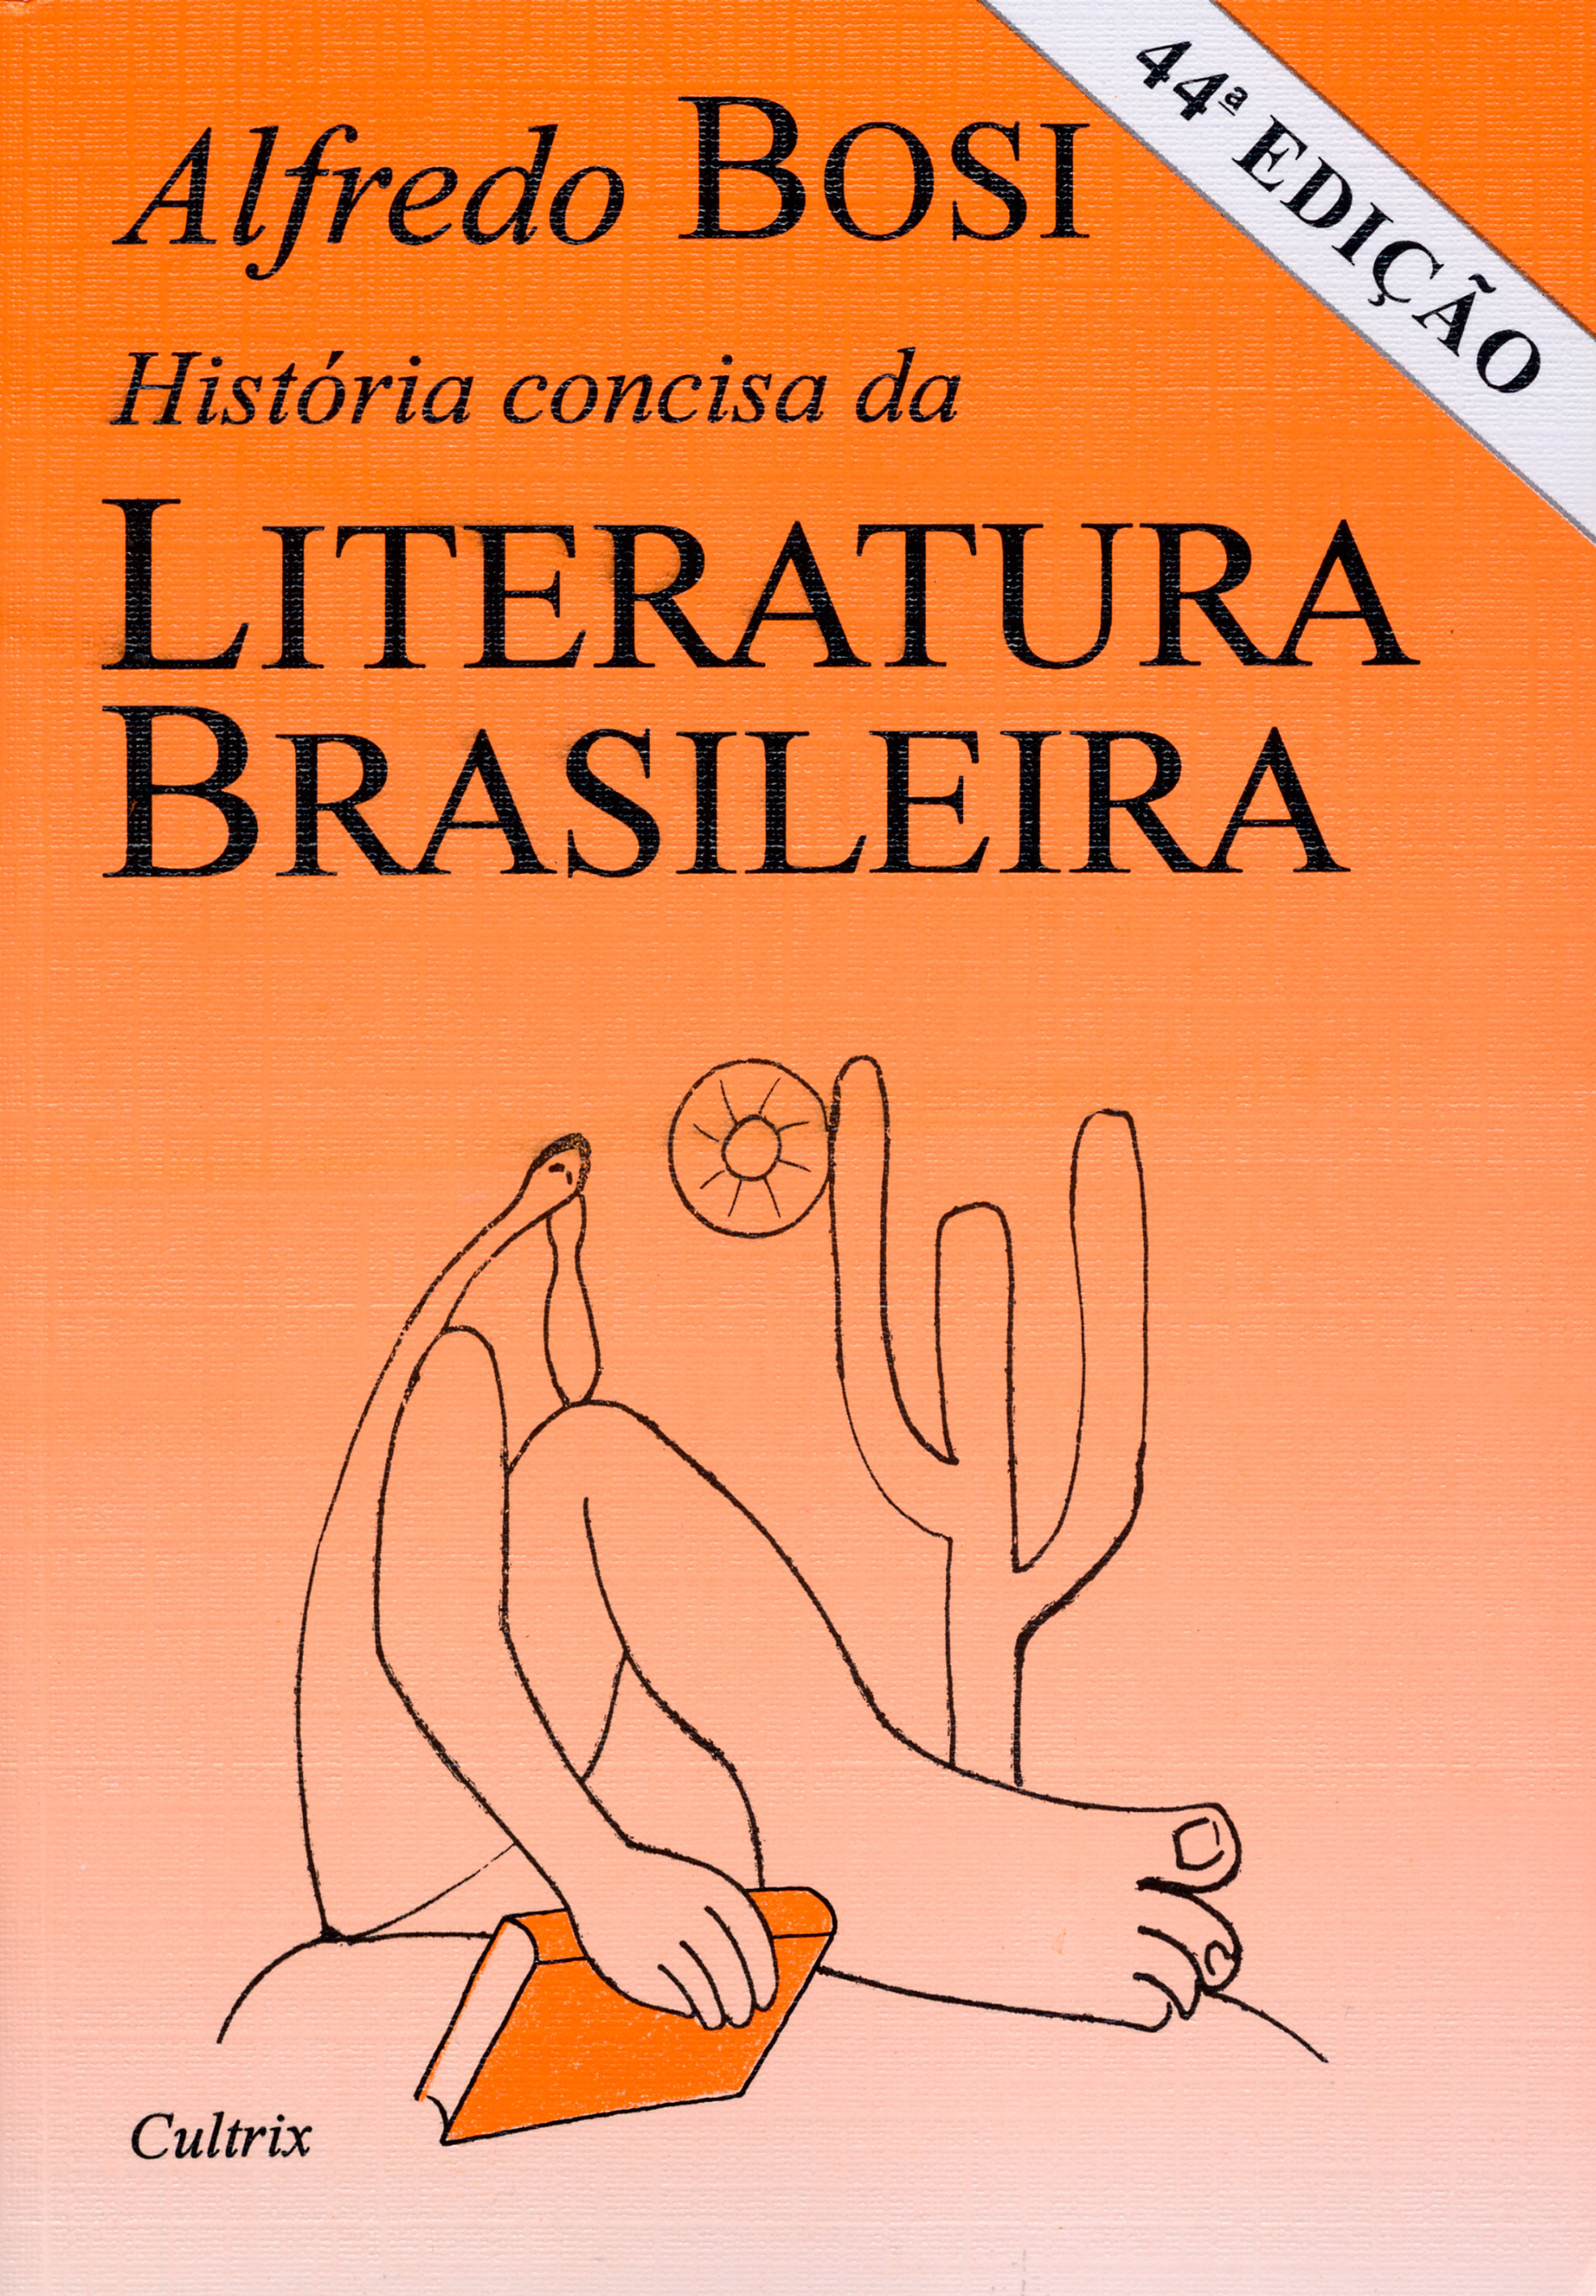  resizer view 373 373 true true historia-concisa-da-literatura-brasileira-2287